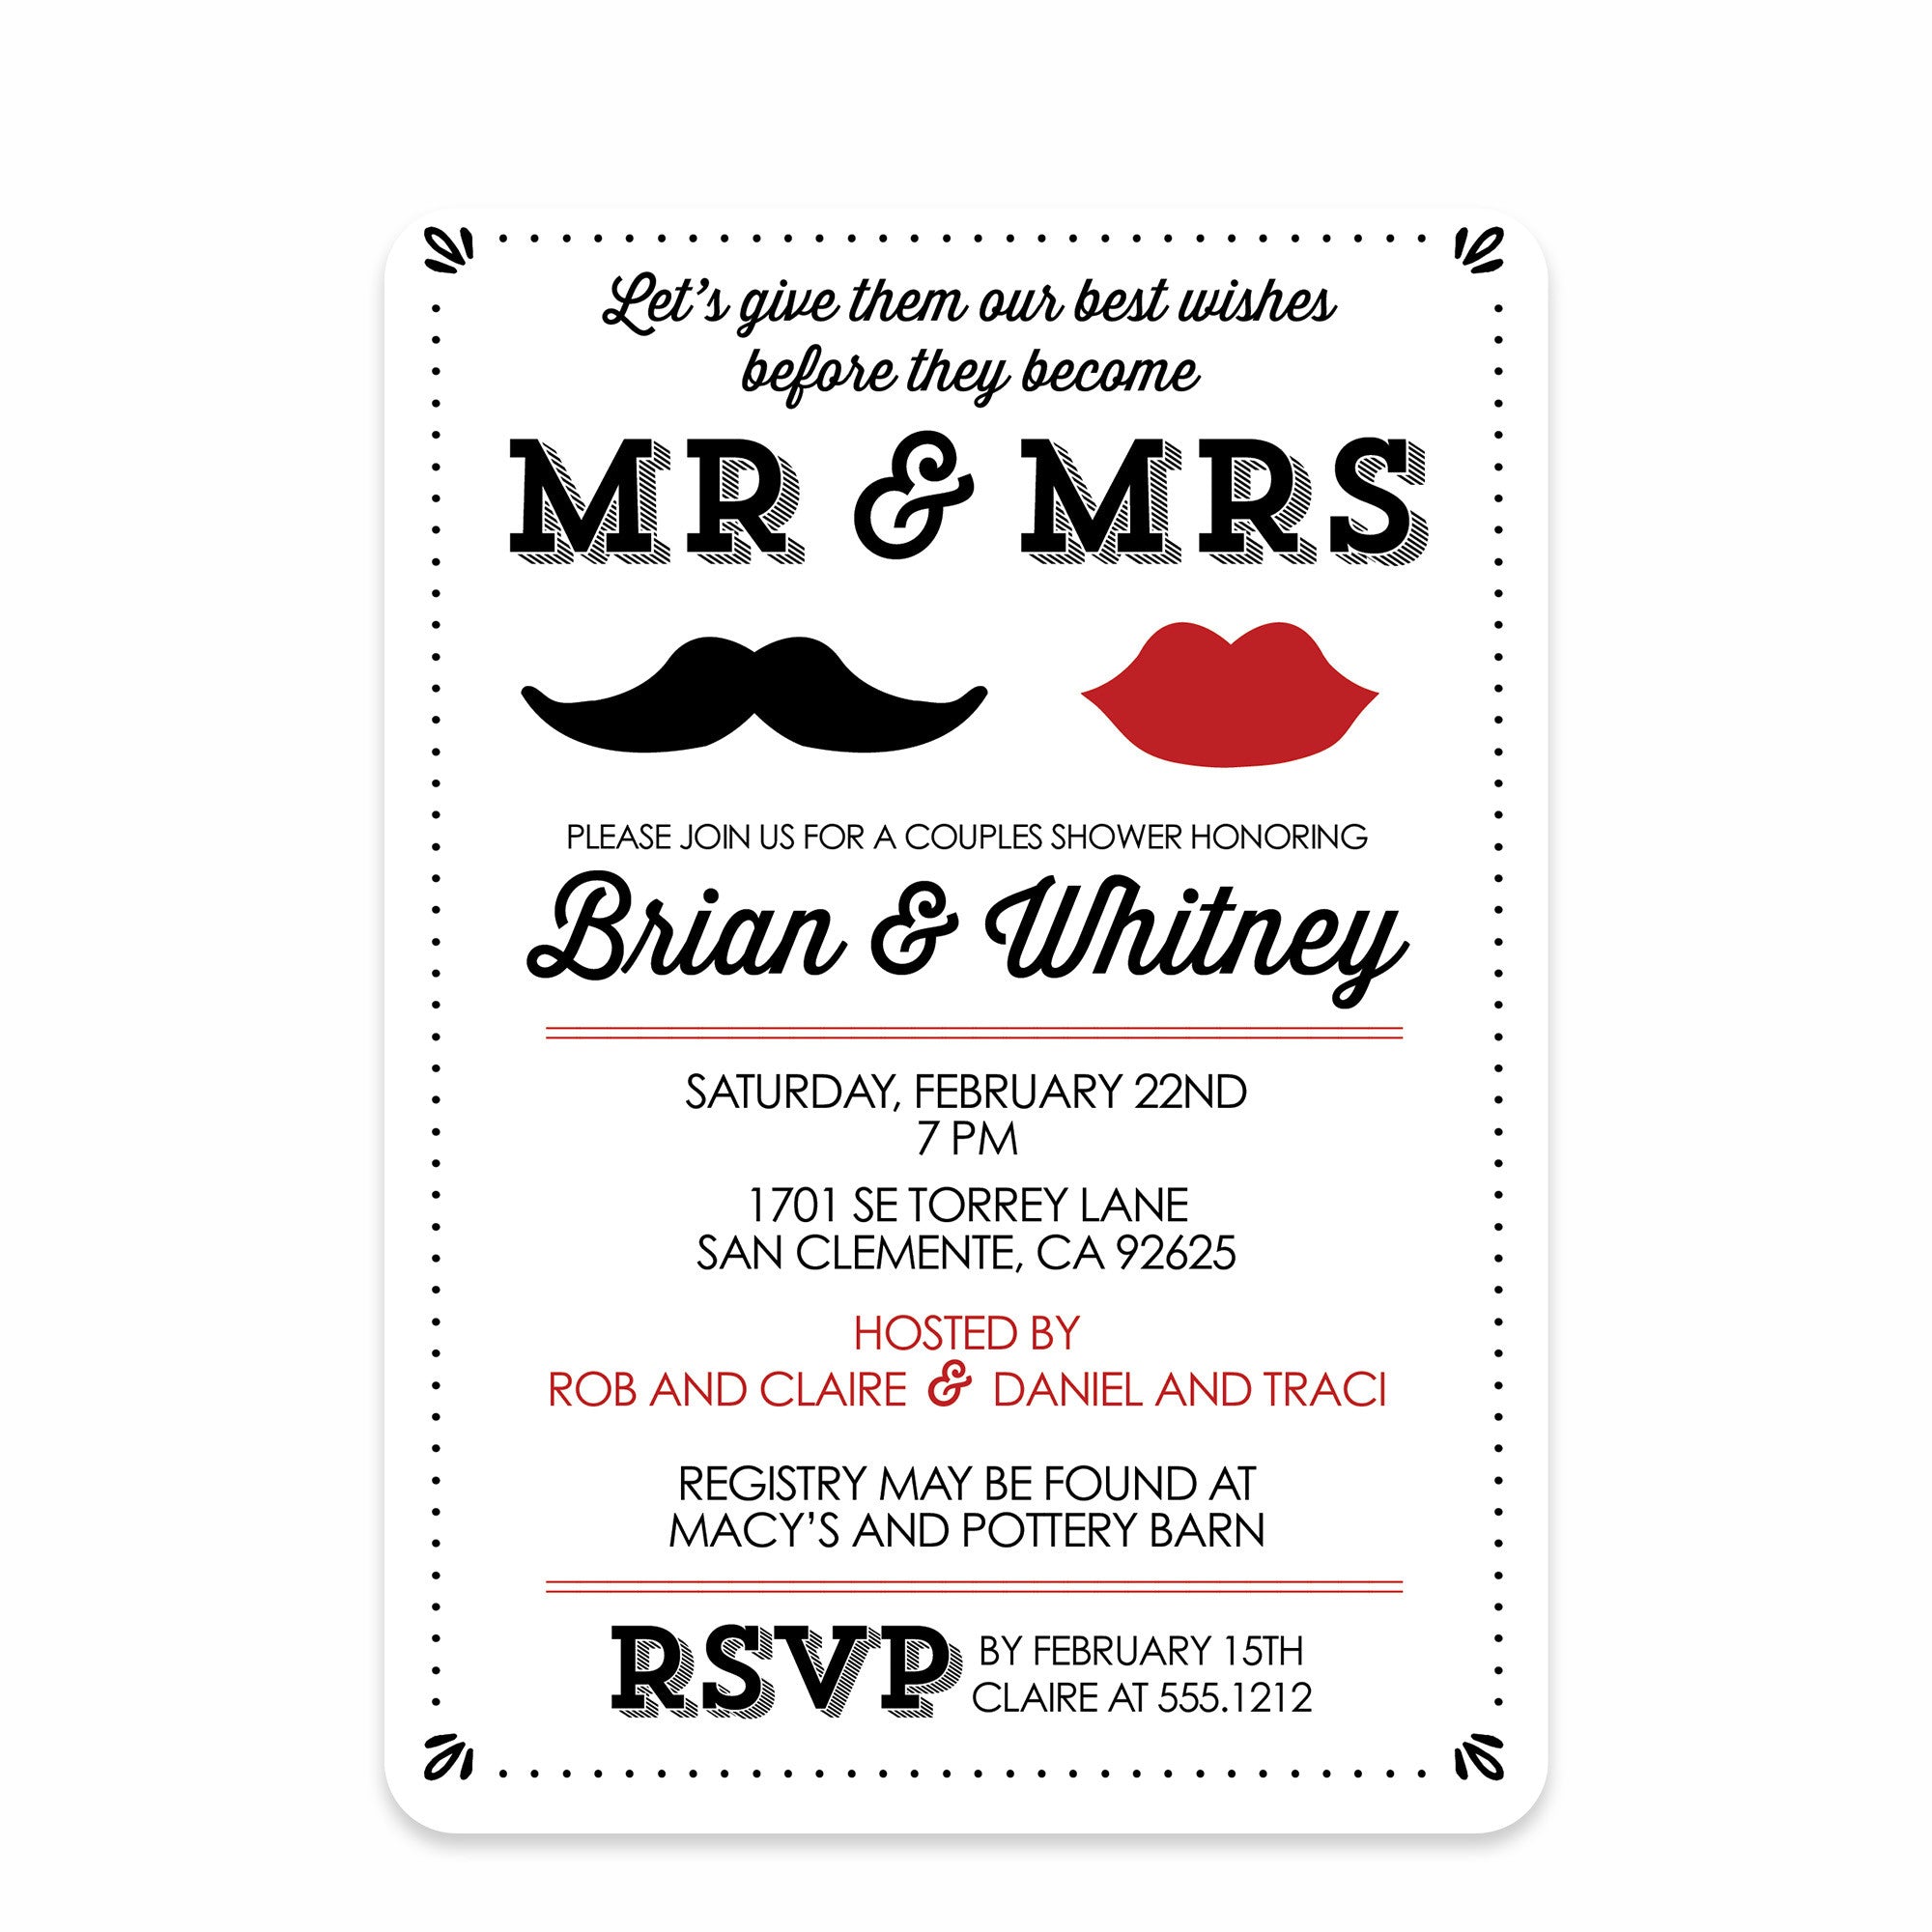 Mr & Mrs Party Invitation